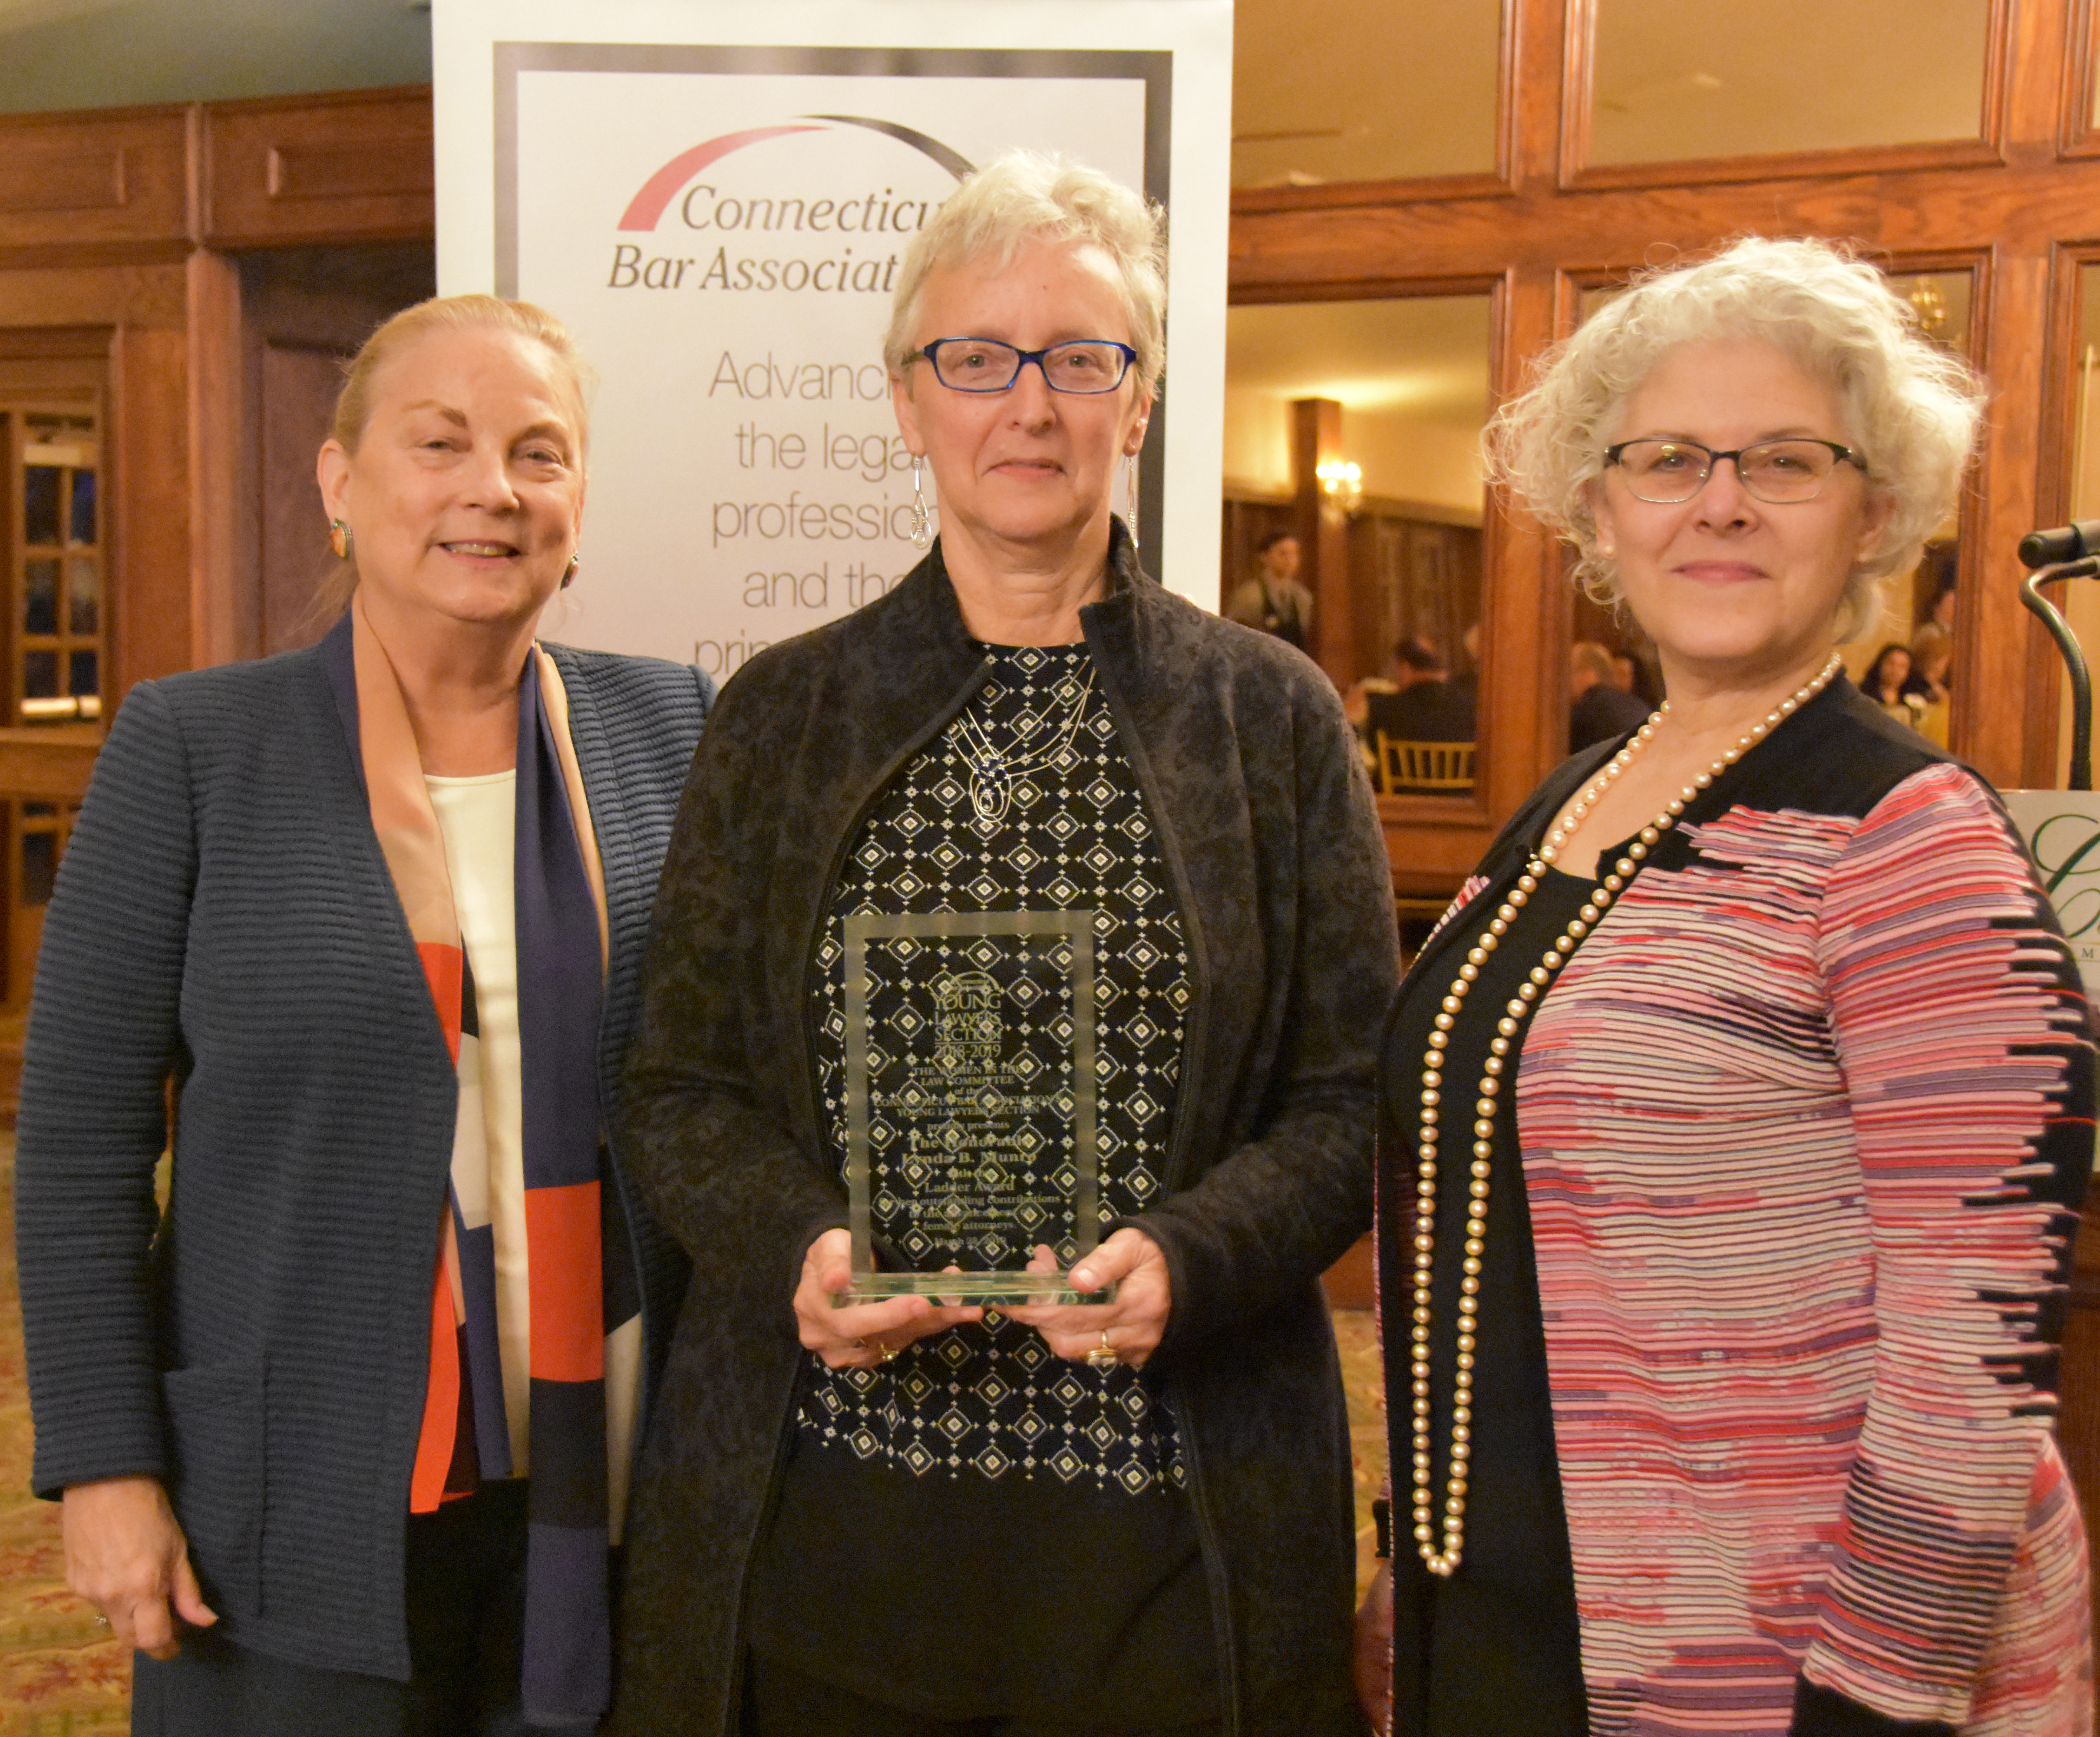 2019 Ladder Award Winner Hon. Lynda B. Munro and her colleagues, Hon. Anne C. Dranginis and CBA Past President Livia D. Barndollar (2008-2009), both of Pullman & Comley LLC.